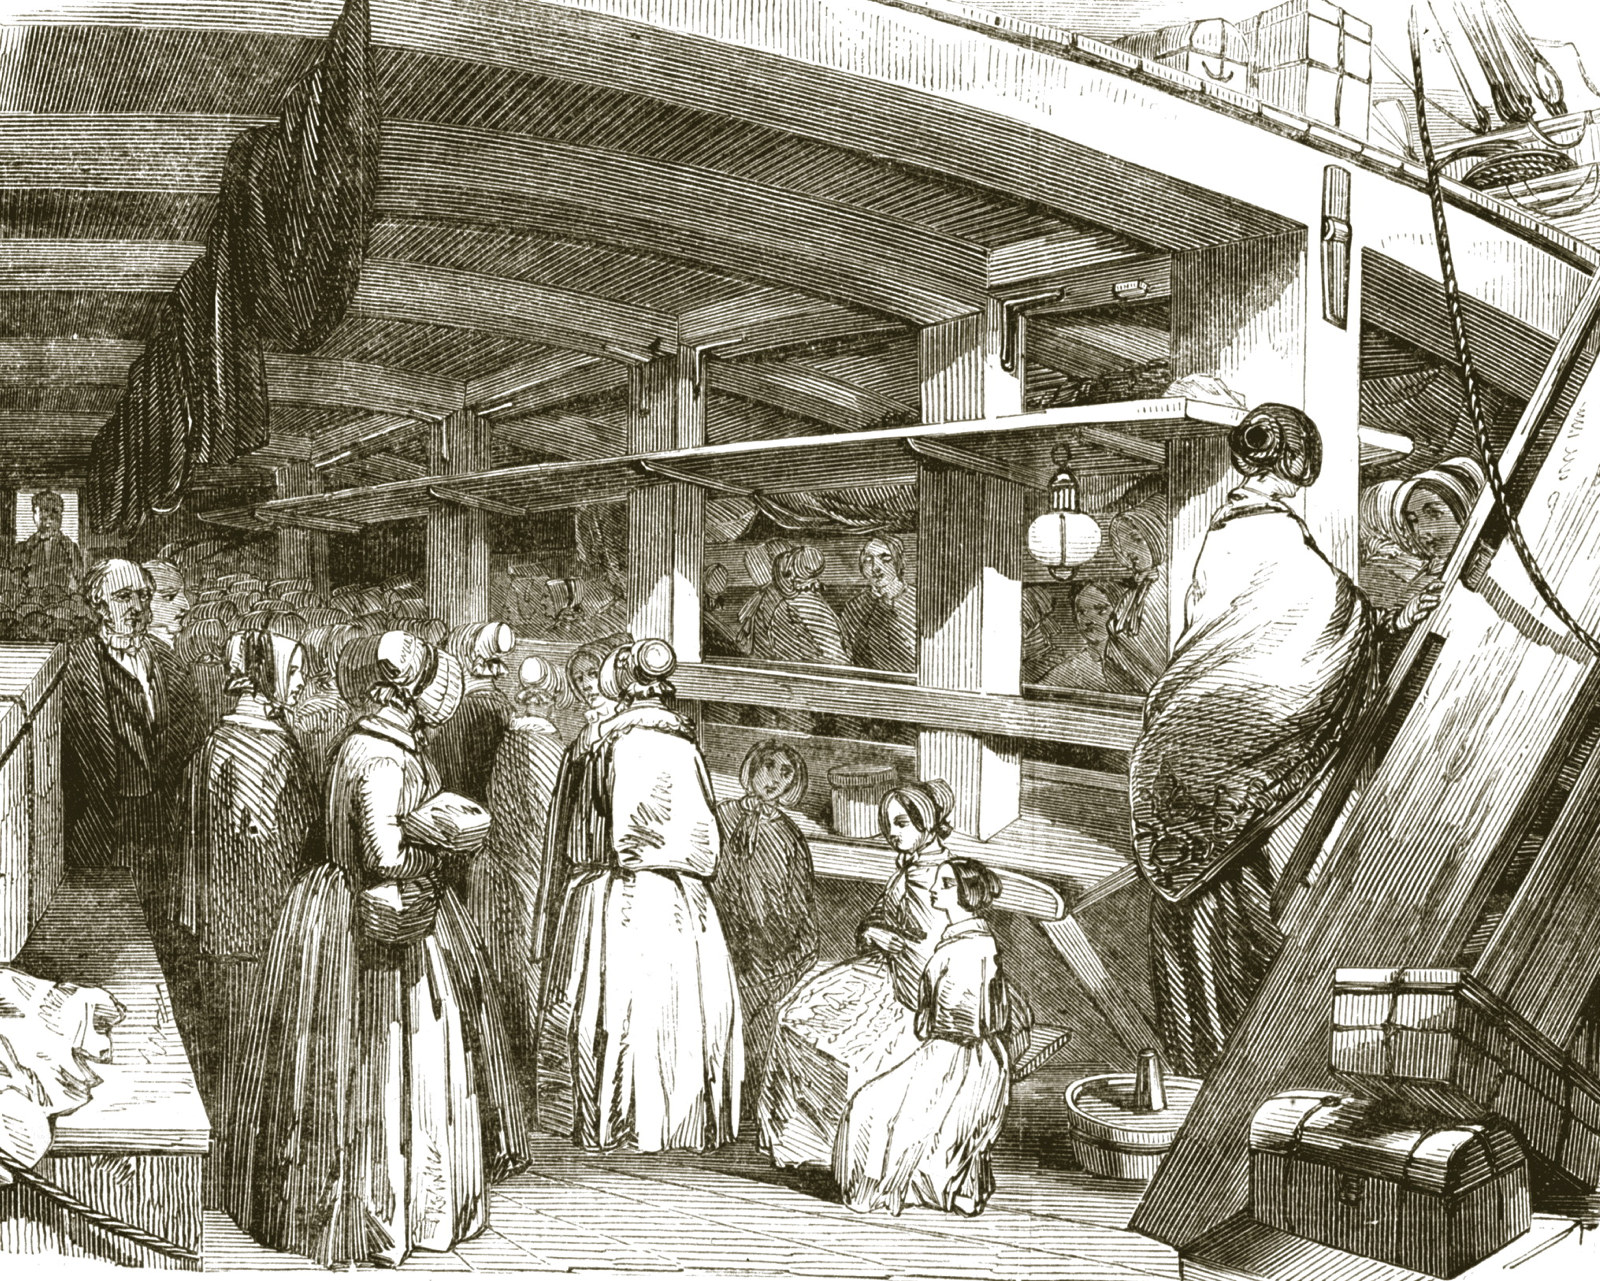  Emigrant ship, between decks (detail)